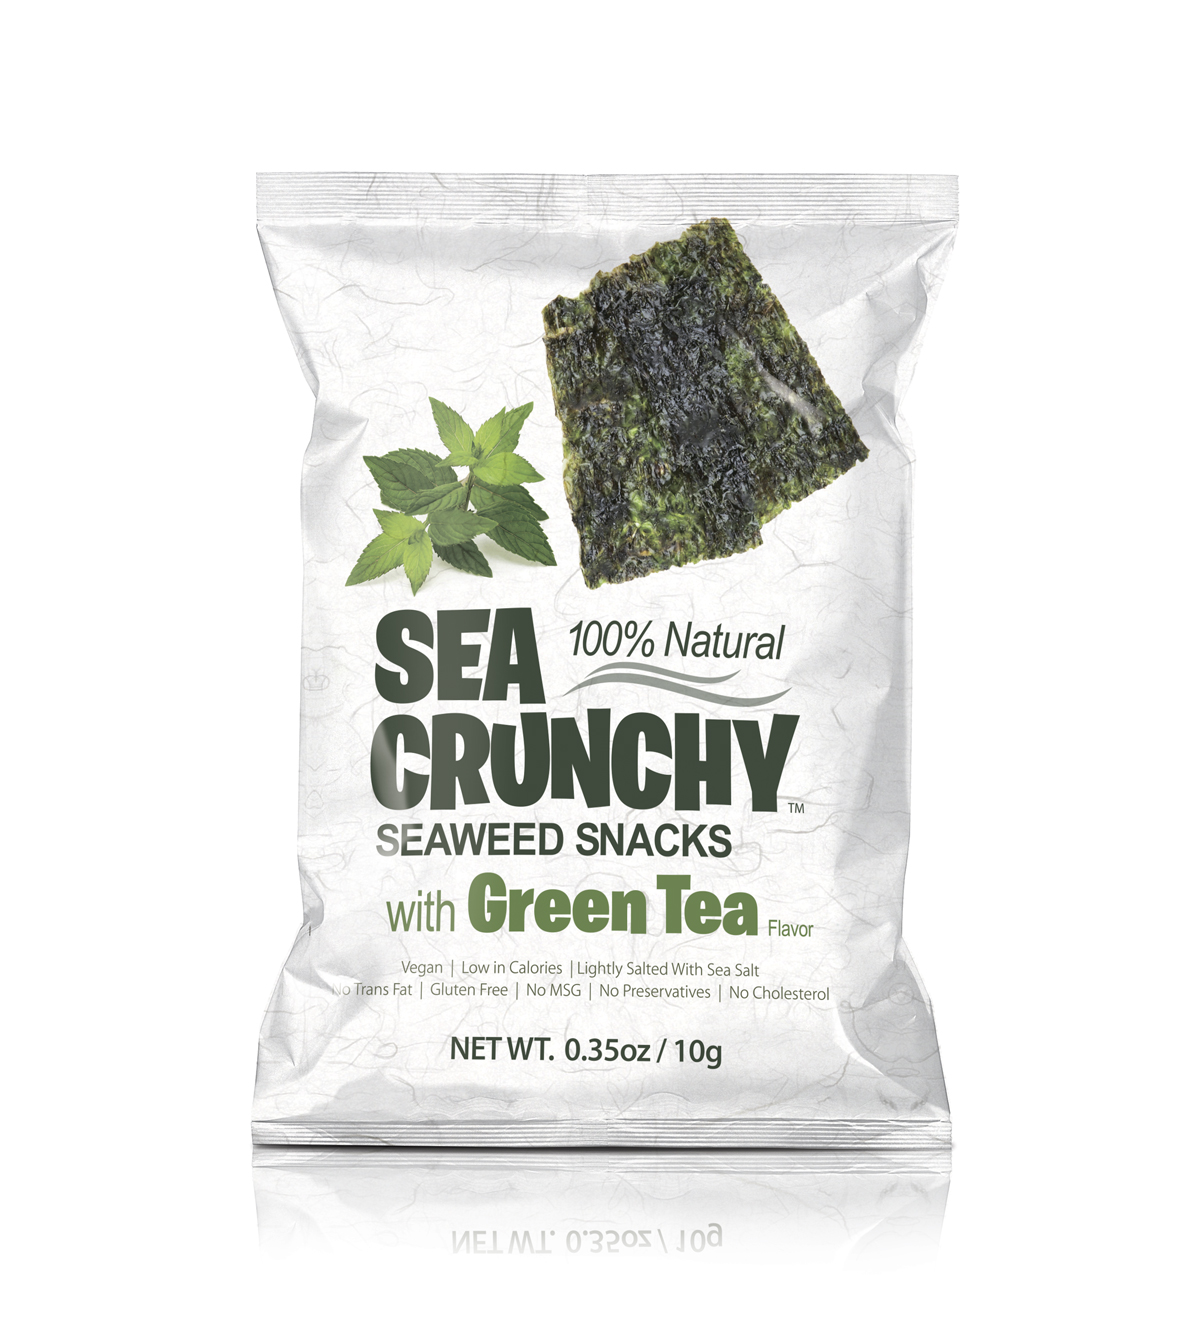 SEA CRUNCHY Seaweed Snacks with green tea image.